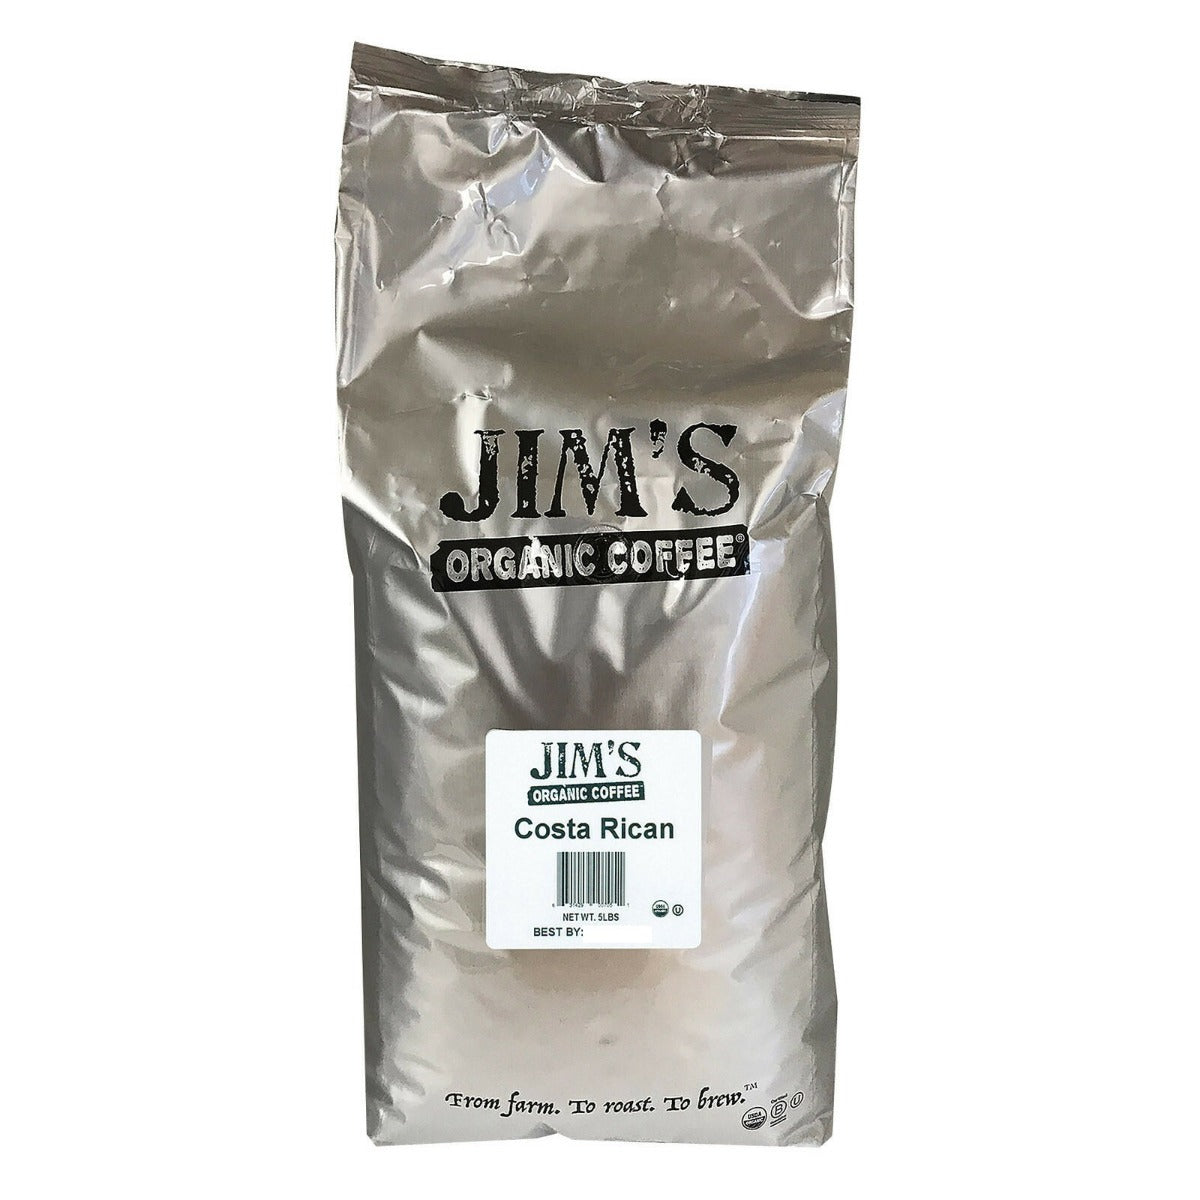 JIMS ORGANIC COFFEE: Organic Costa Rican Coffee, 5 lb - Vending Business Solutions